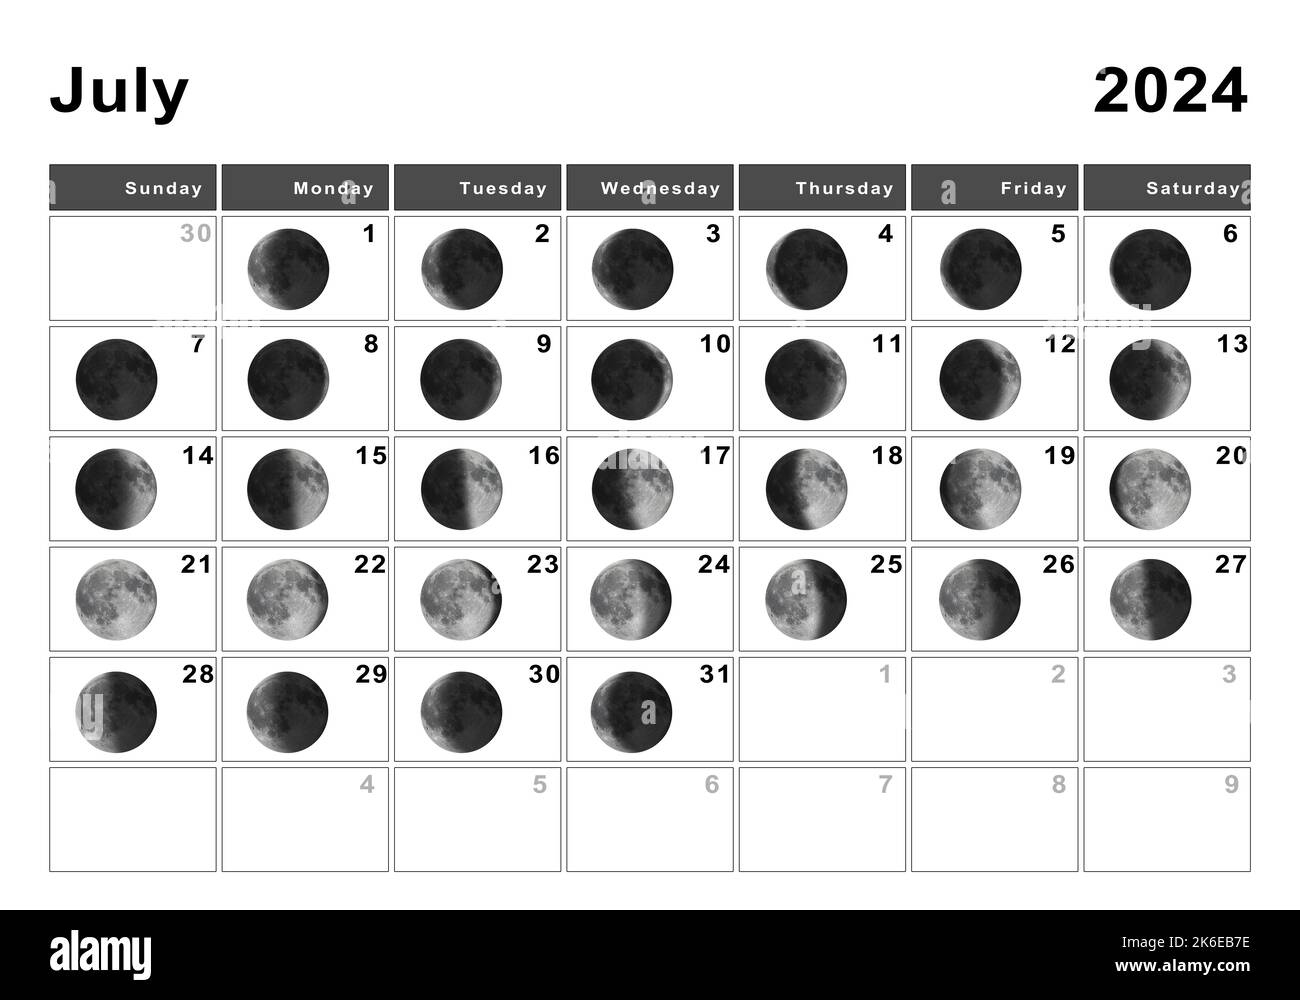 July 2024 Lunar Calendar, Moon Cycles, Moon Phases Stock Photo - Alamy | Moon Phases Calendar July 2024